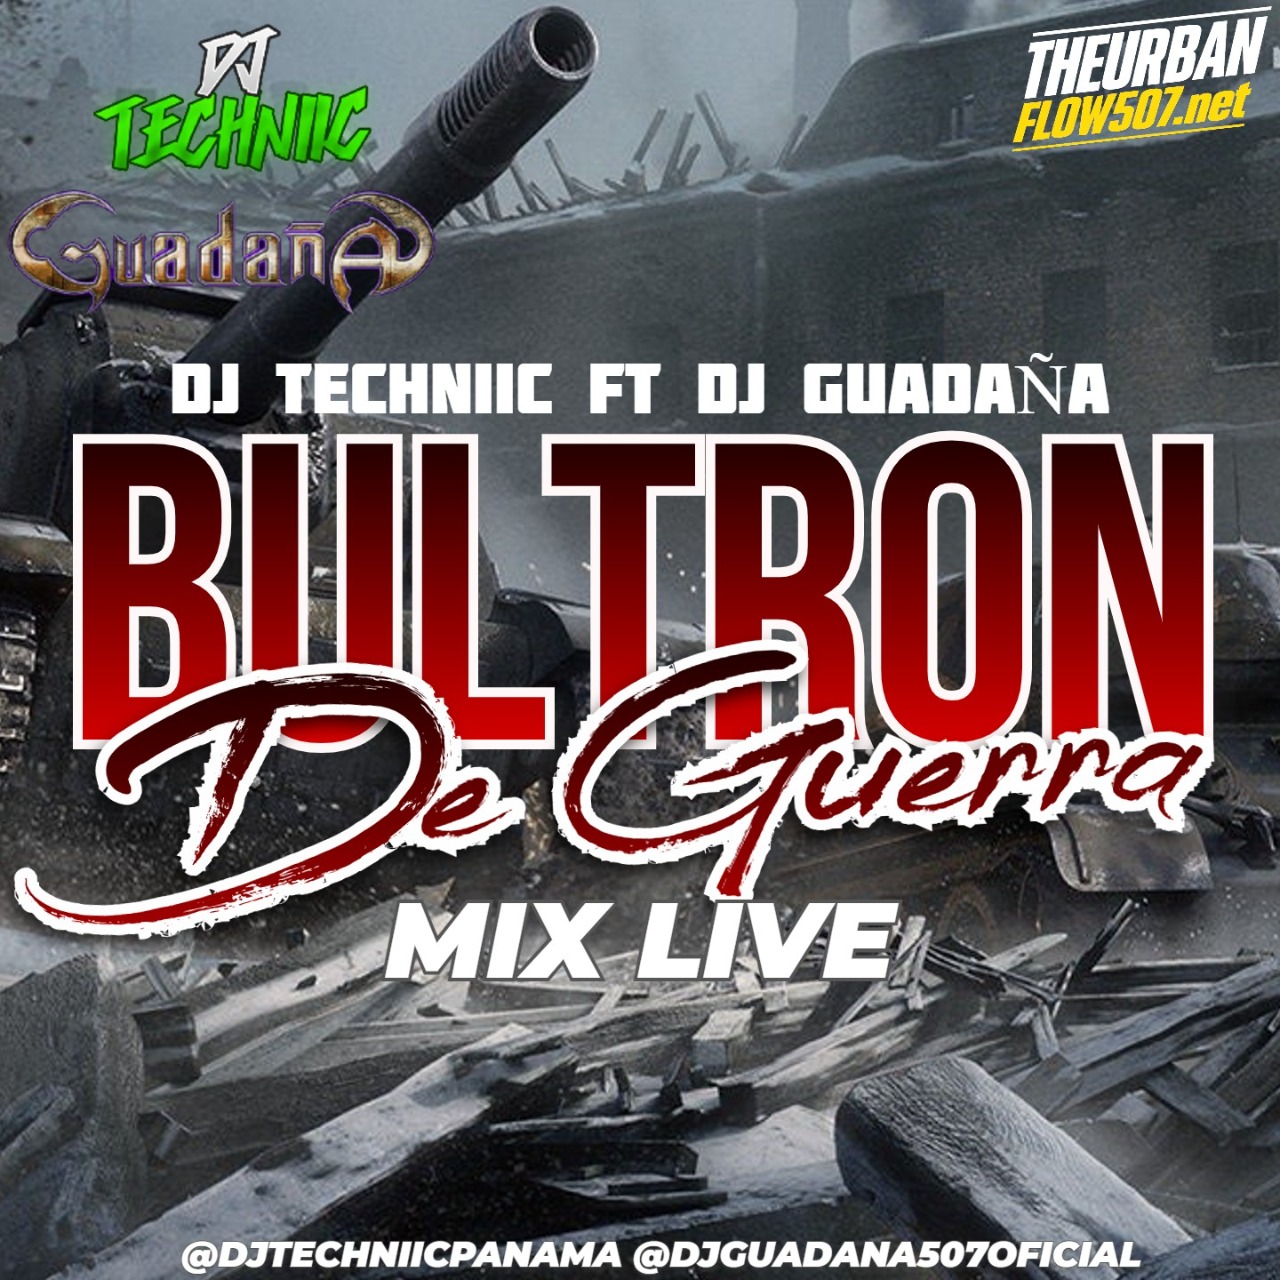 BULTRON DE GUERRA MIX LIVE - DJ TECHNIIC FT DJ GUADAÑA